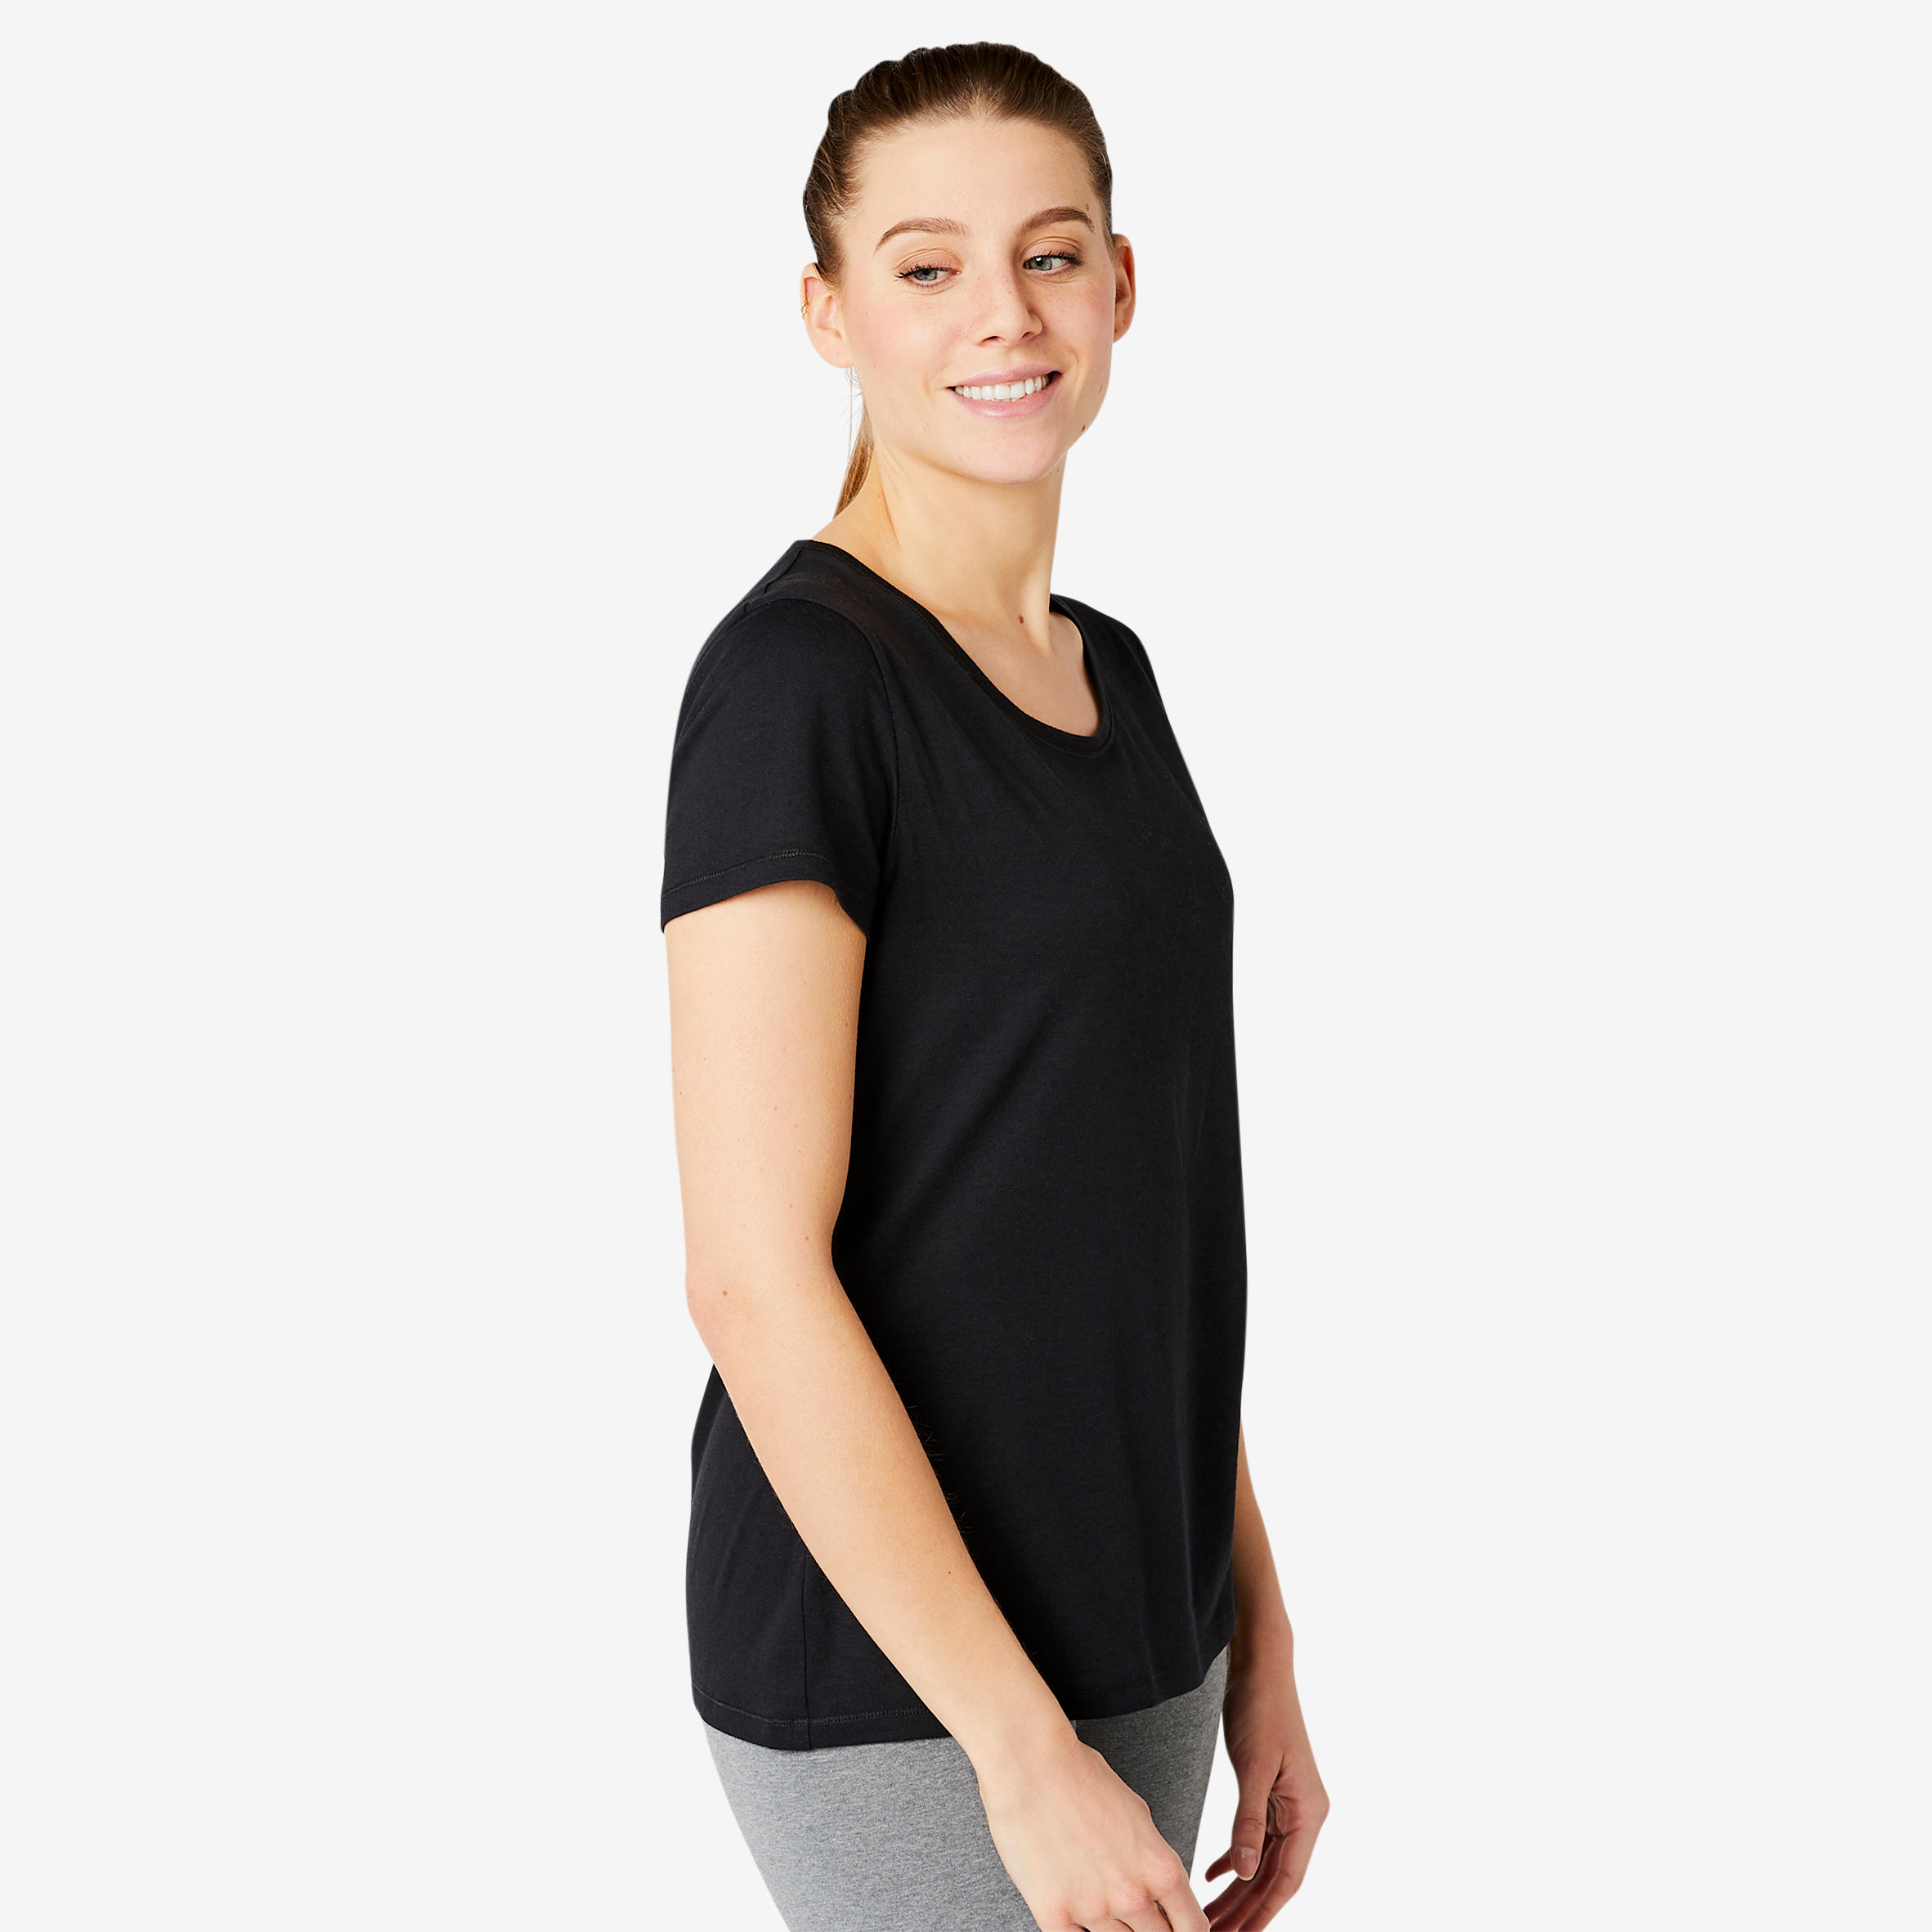 iClosam T-Shirt de Sport Femme à Manche Courte Tee Shirt de Running//Fitness//Yoga//Pilate Respirant et Facile à Absorber la Sueur Tops